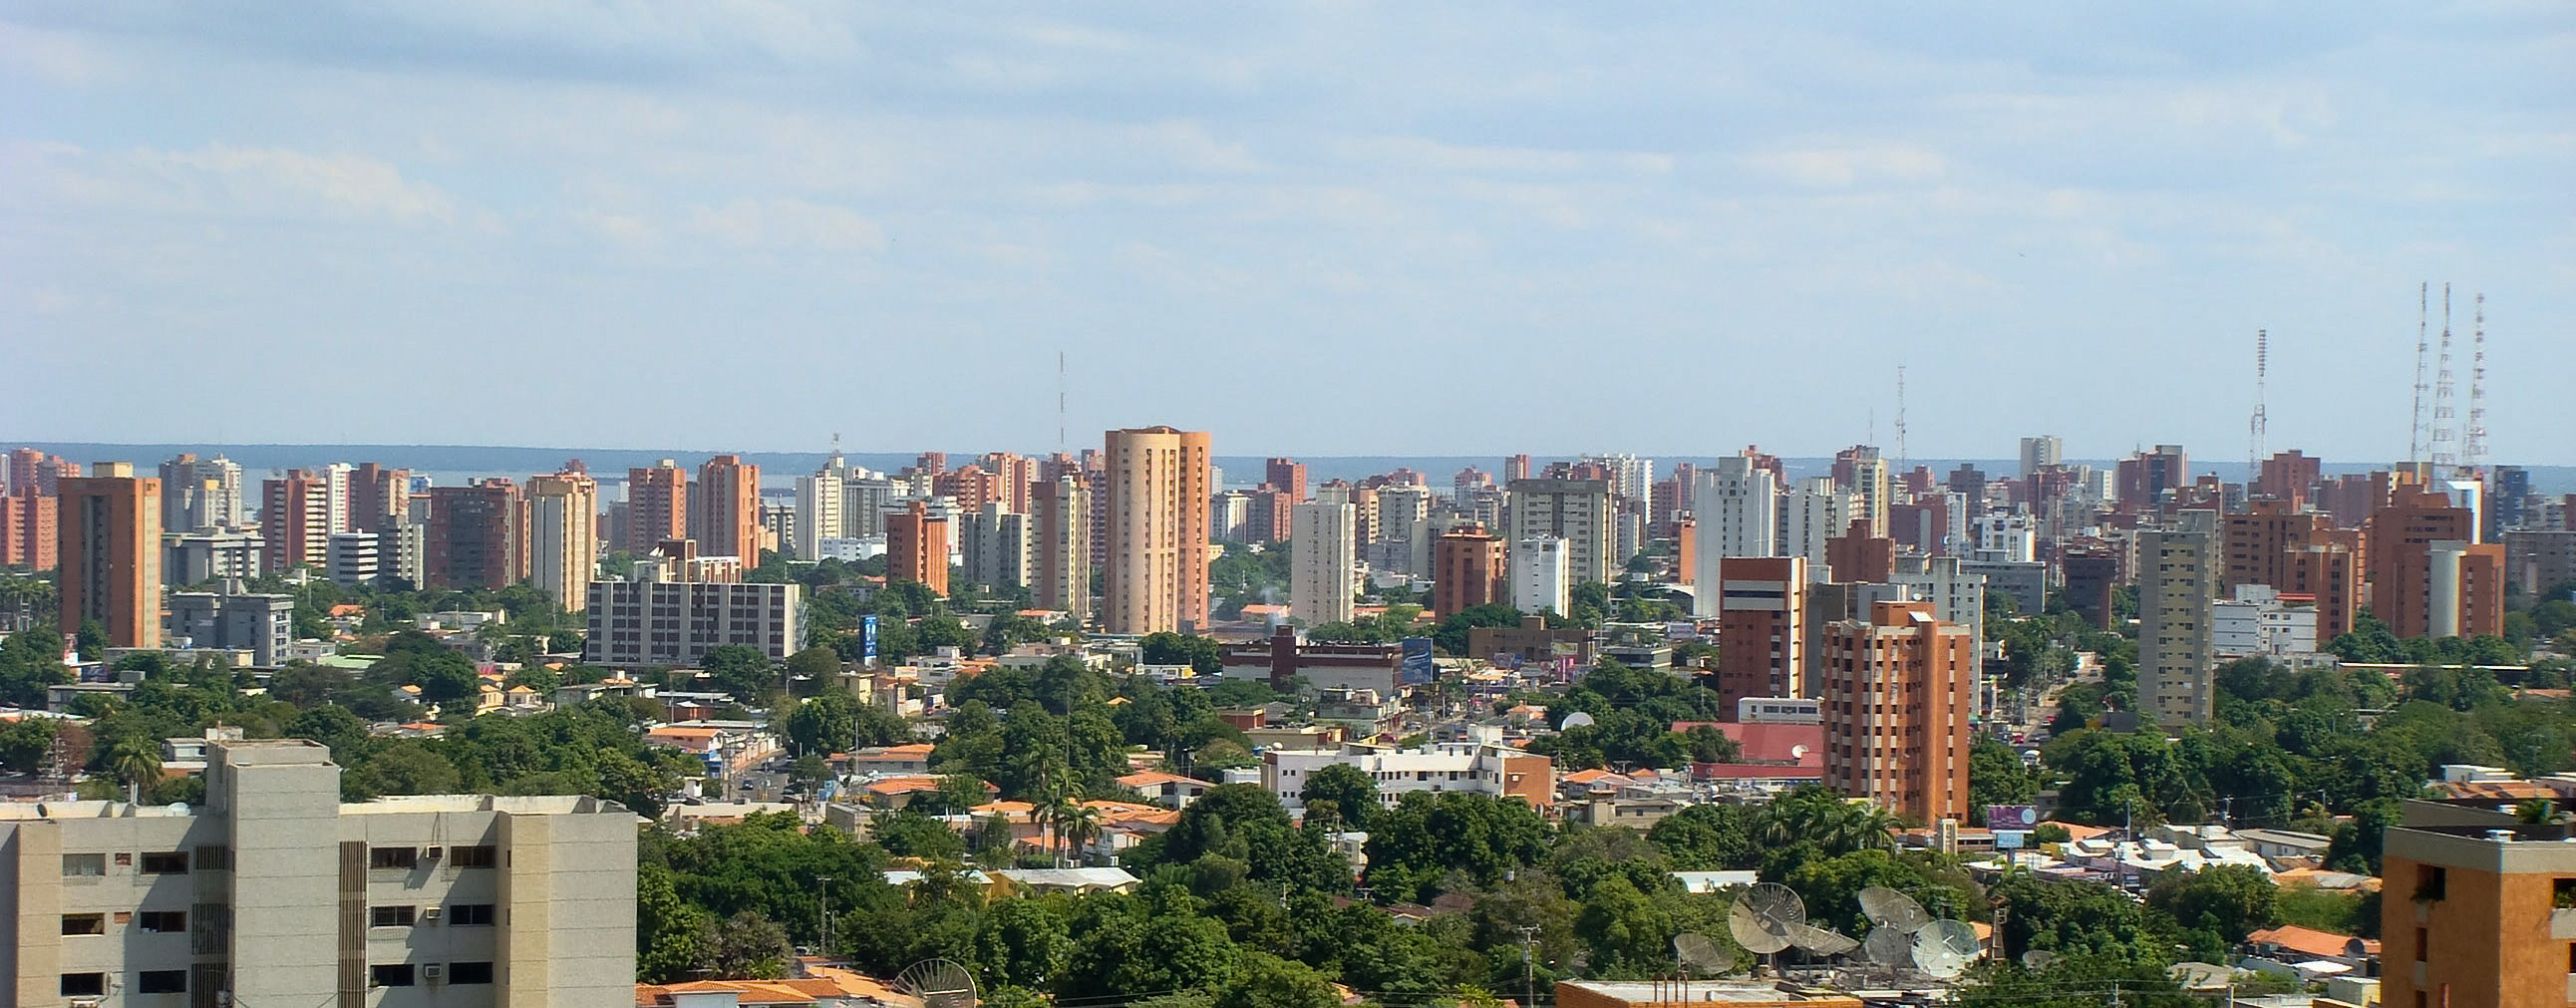 Maracaibo - Wikipedia